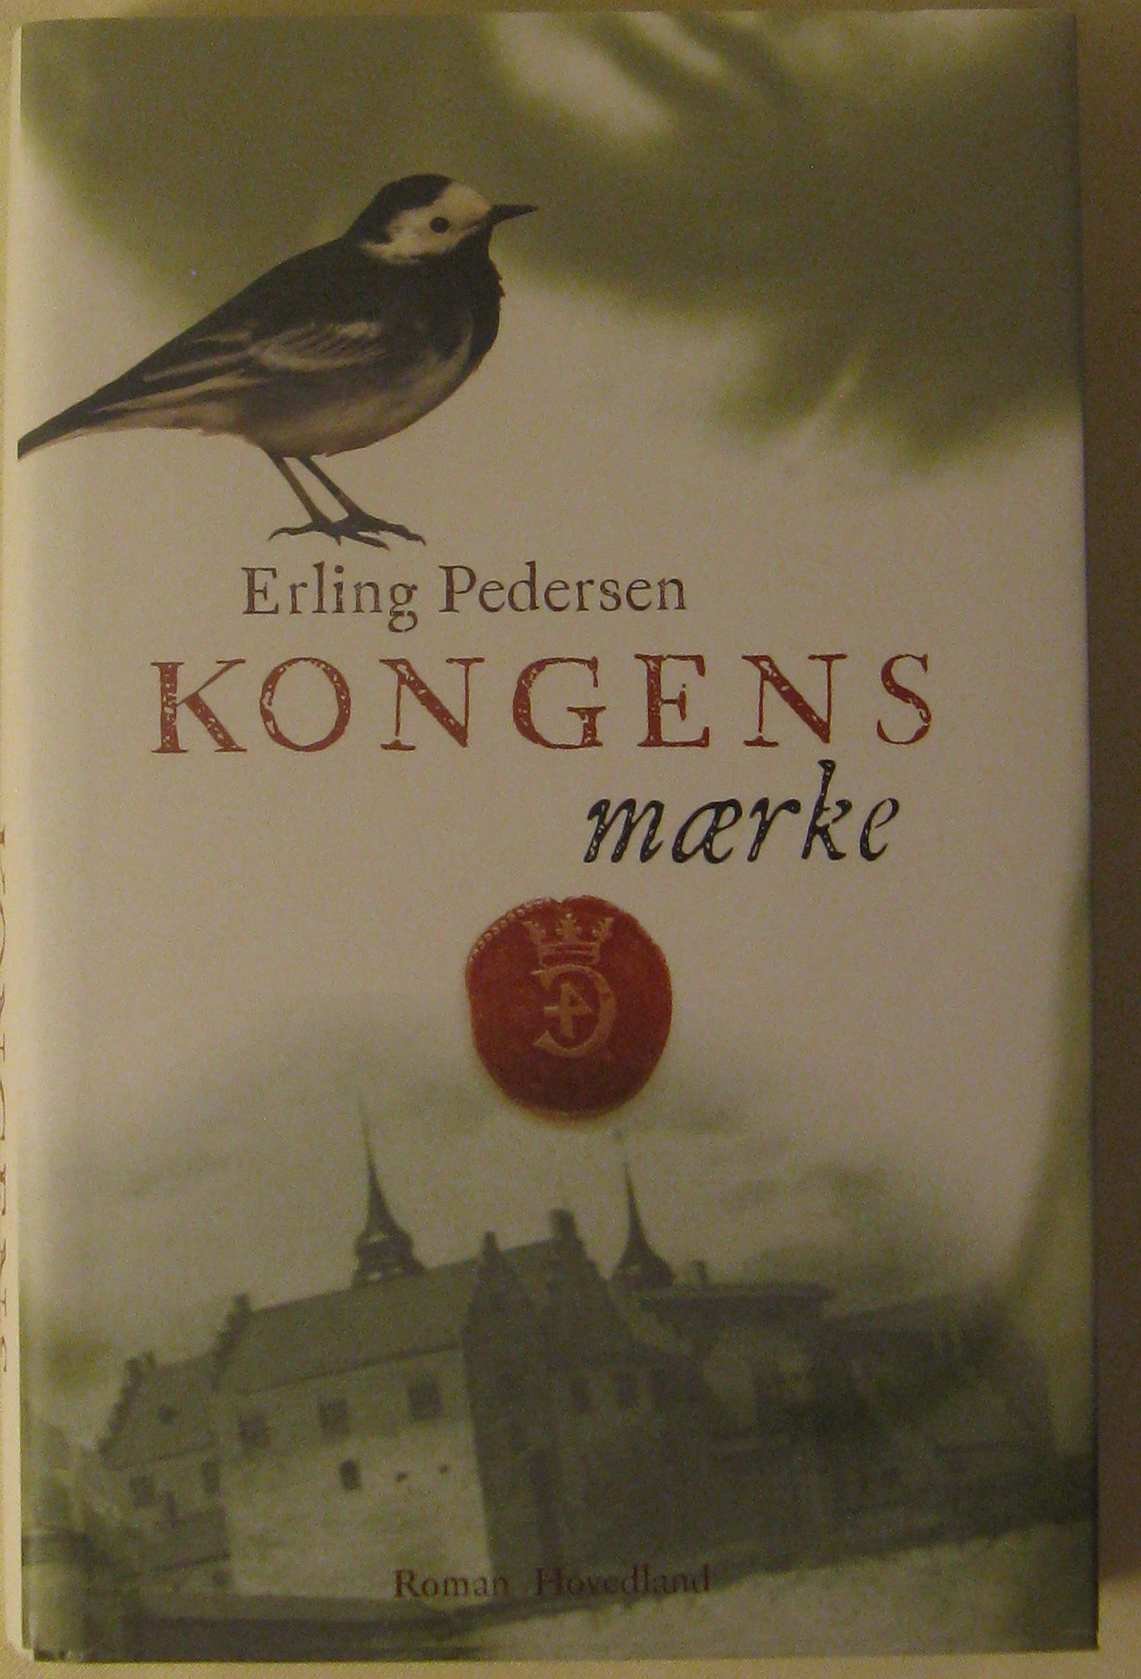 Kongens mærke, Danmark 2007